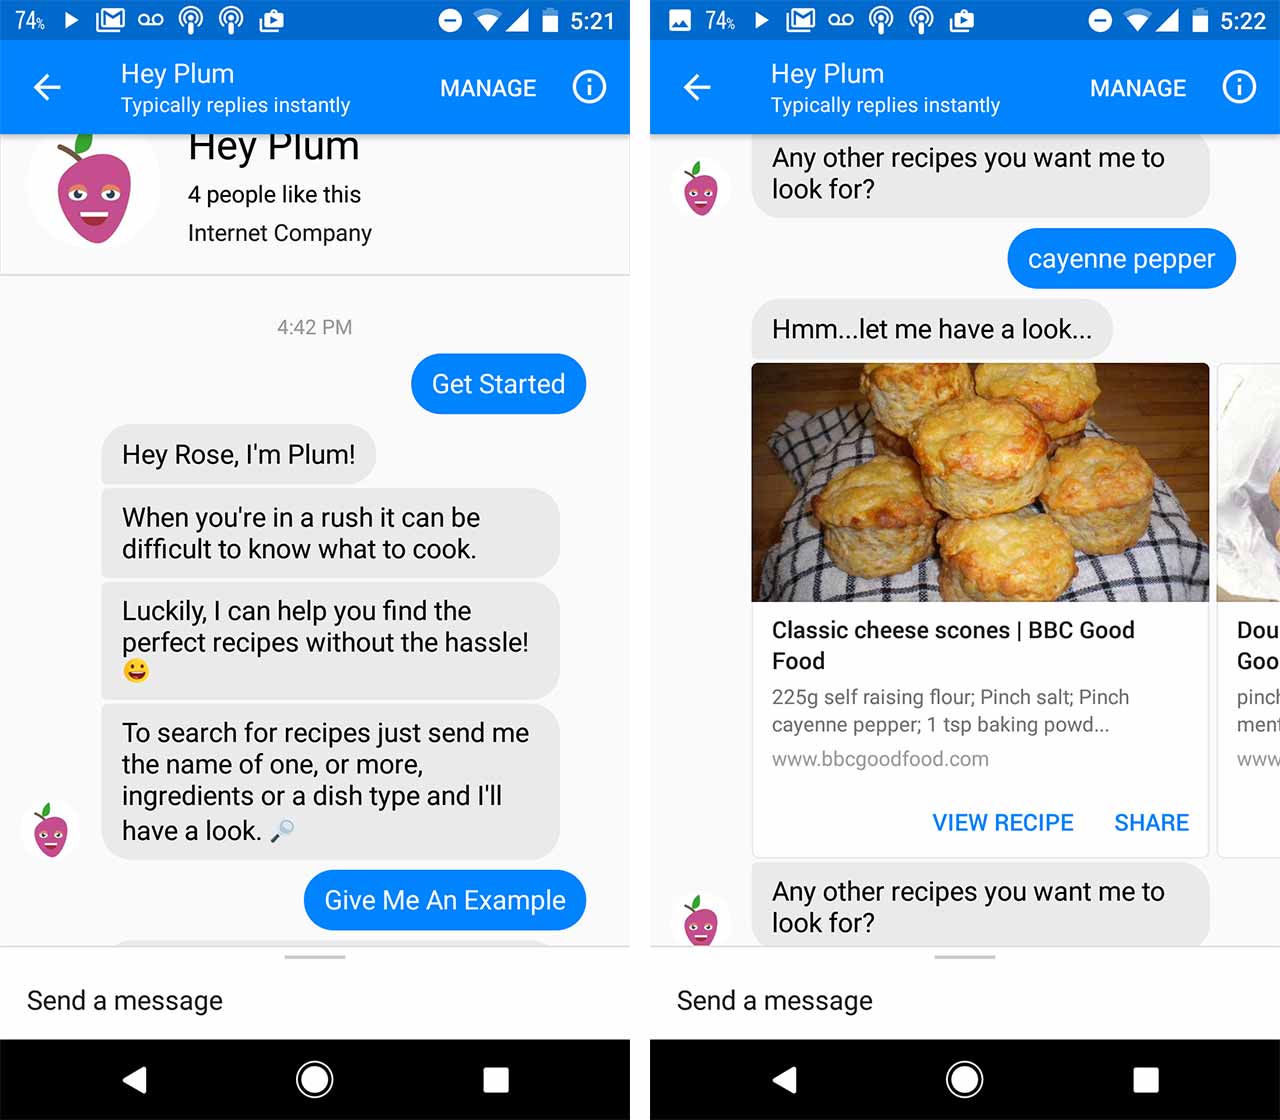 recipe chatbot screen shots - hey plum